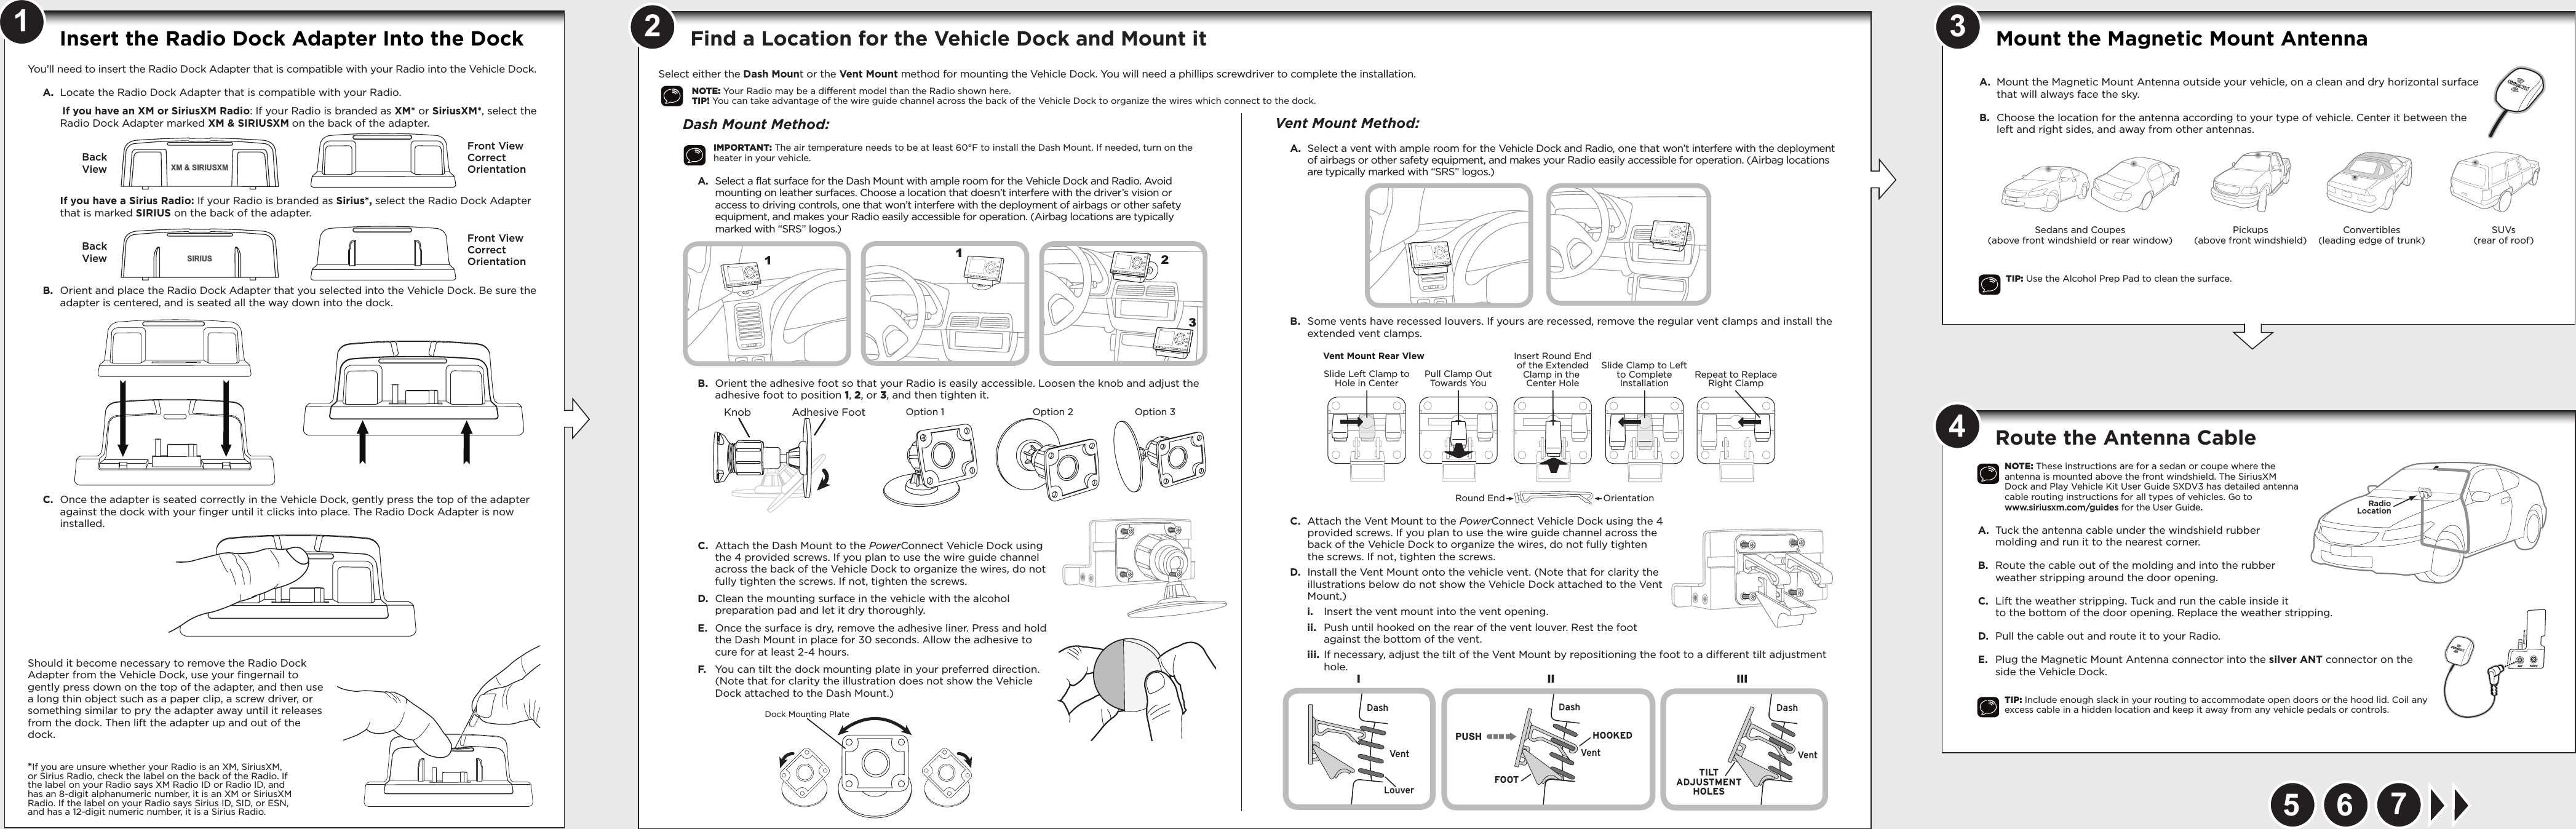 Page 1 of 2 - SIRIUS Sxdv3 D&P Vehicle Kit Quick Start Guide E 140731C User Manual